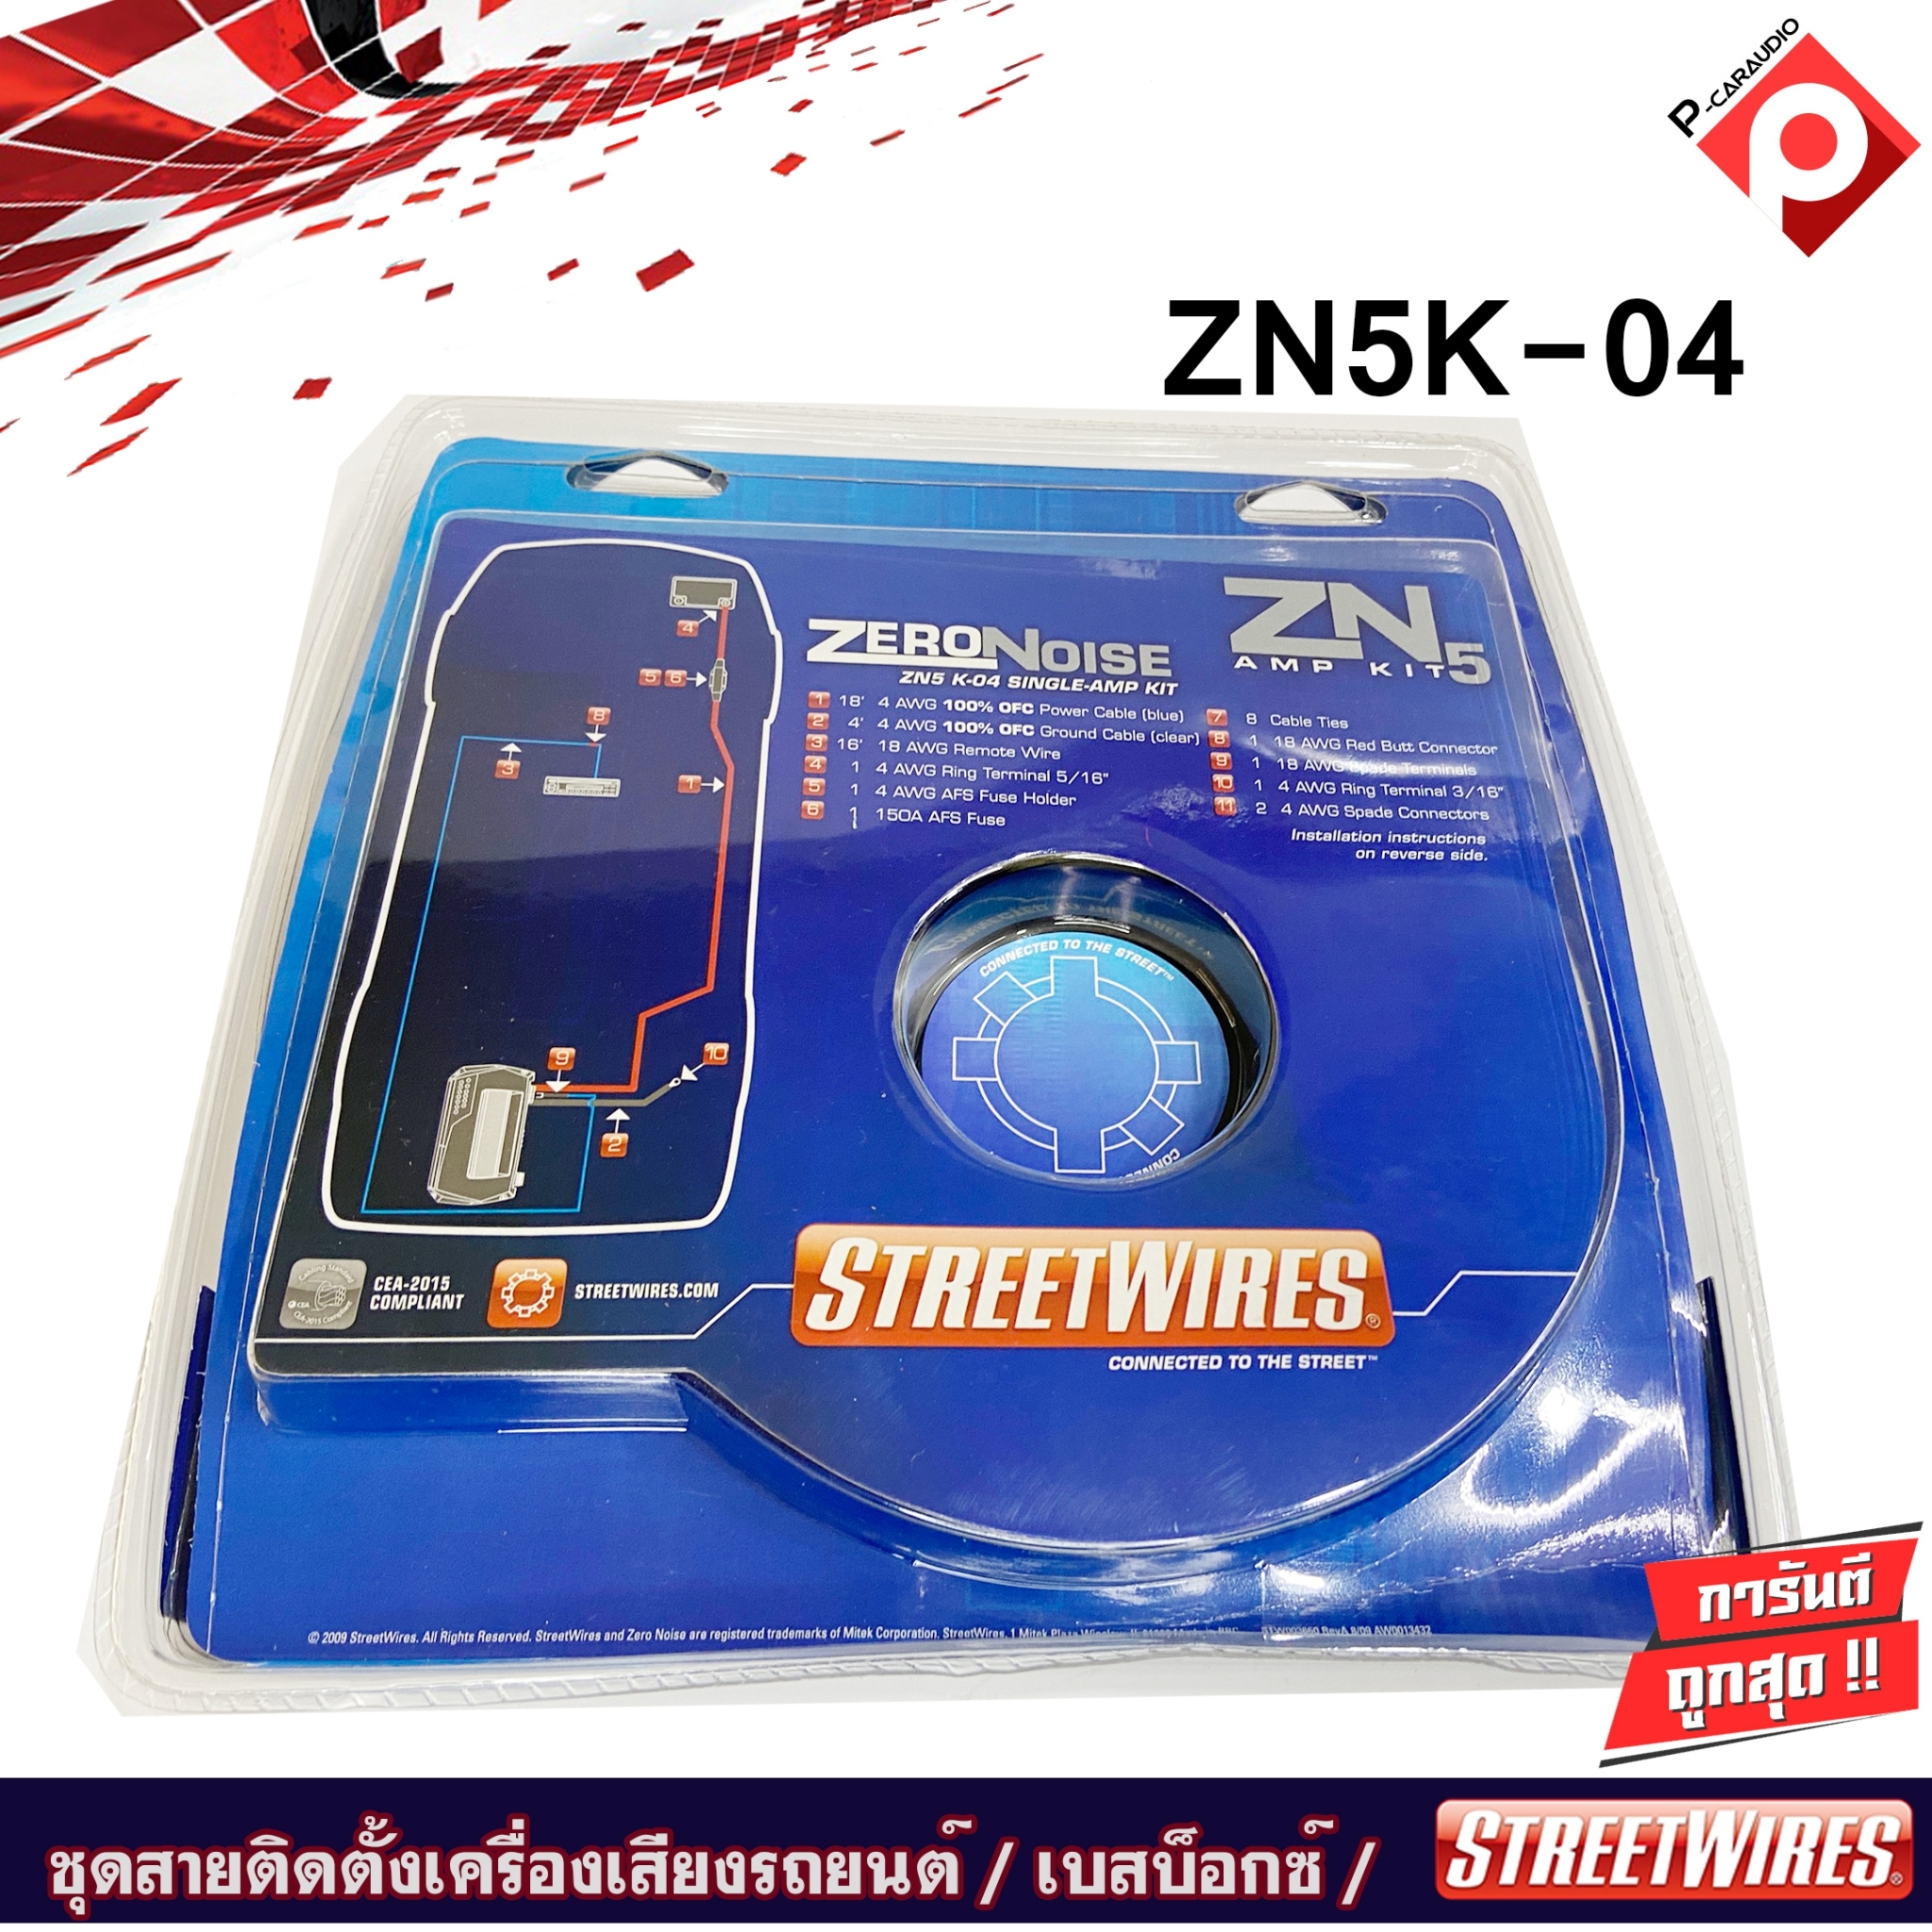 STREETWIRES ZN5K-04 ชุดสายติดตั้งเครื่องเสียงรถยนต์ สัญชาติอเมริกัน เพาเวอร์แอมป์ครบเซ็ท เบสบ็อกซ์ BASS BOX